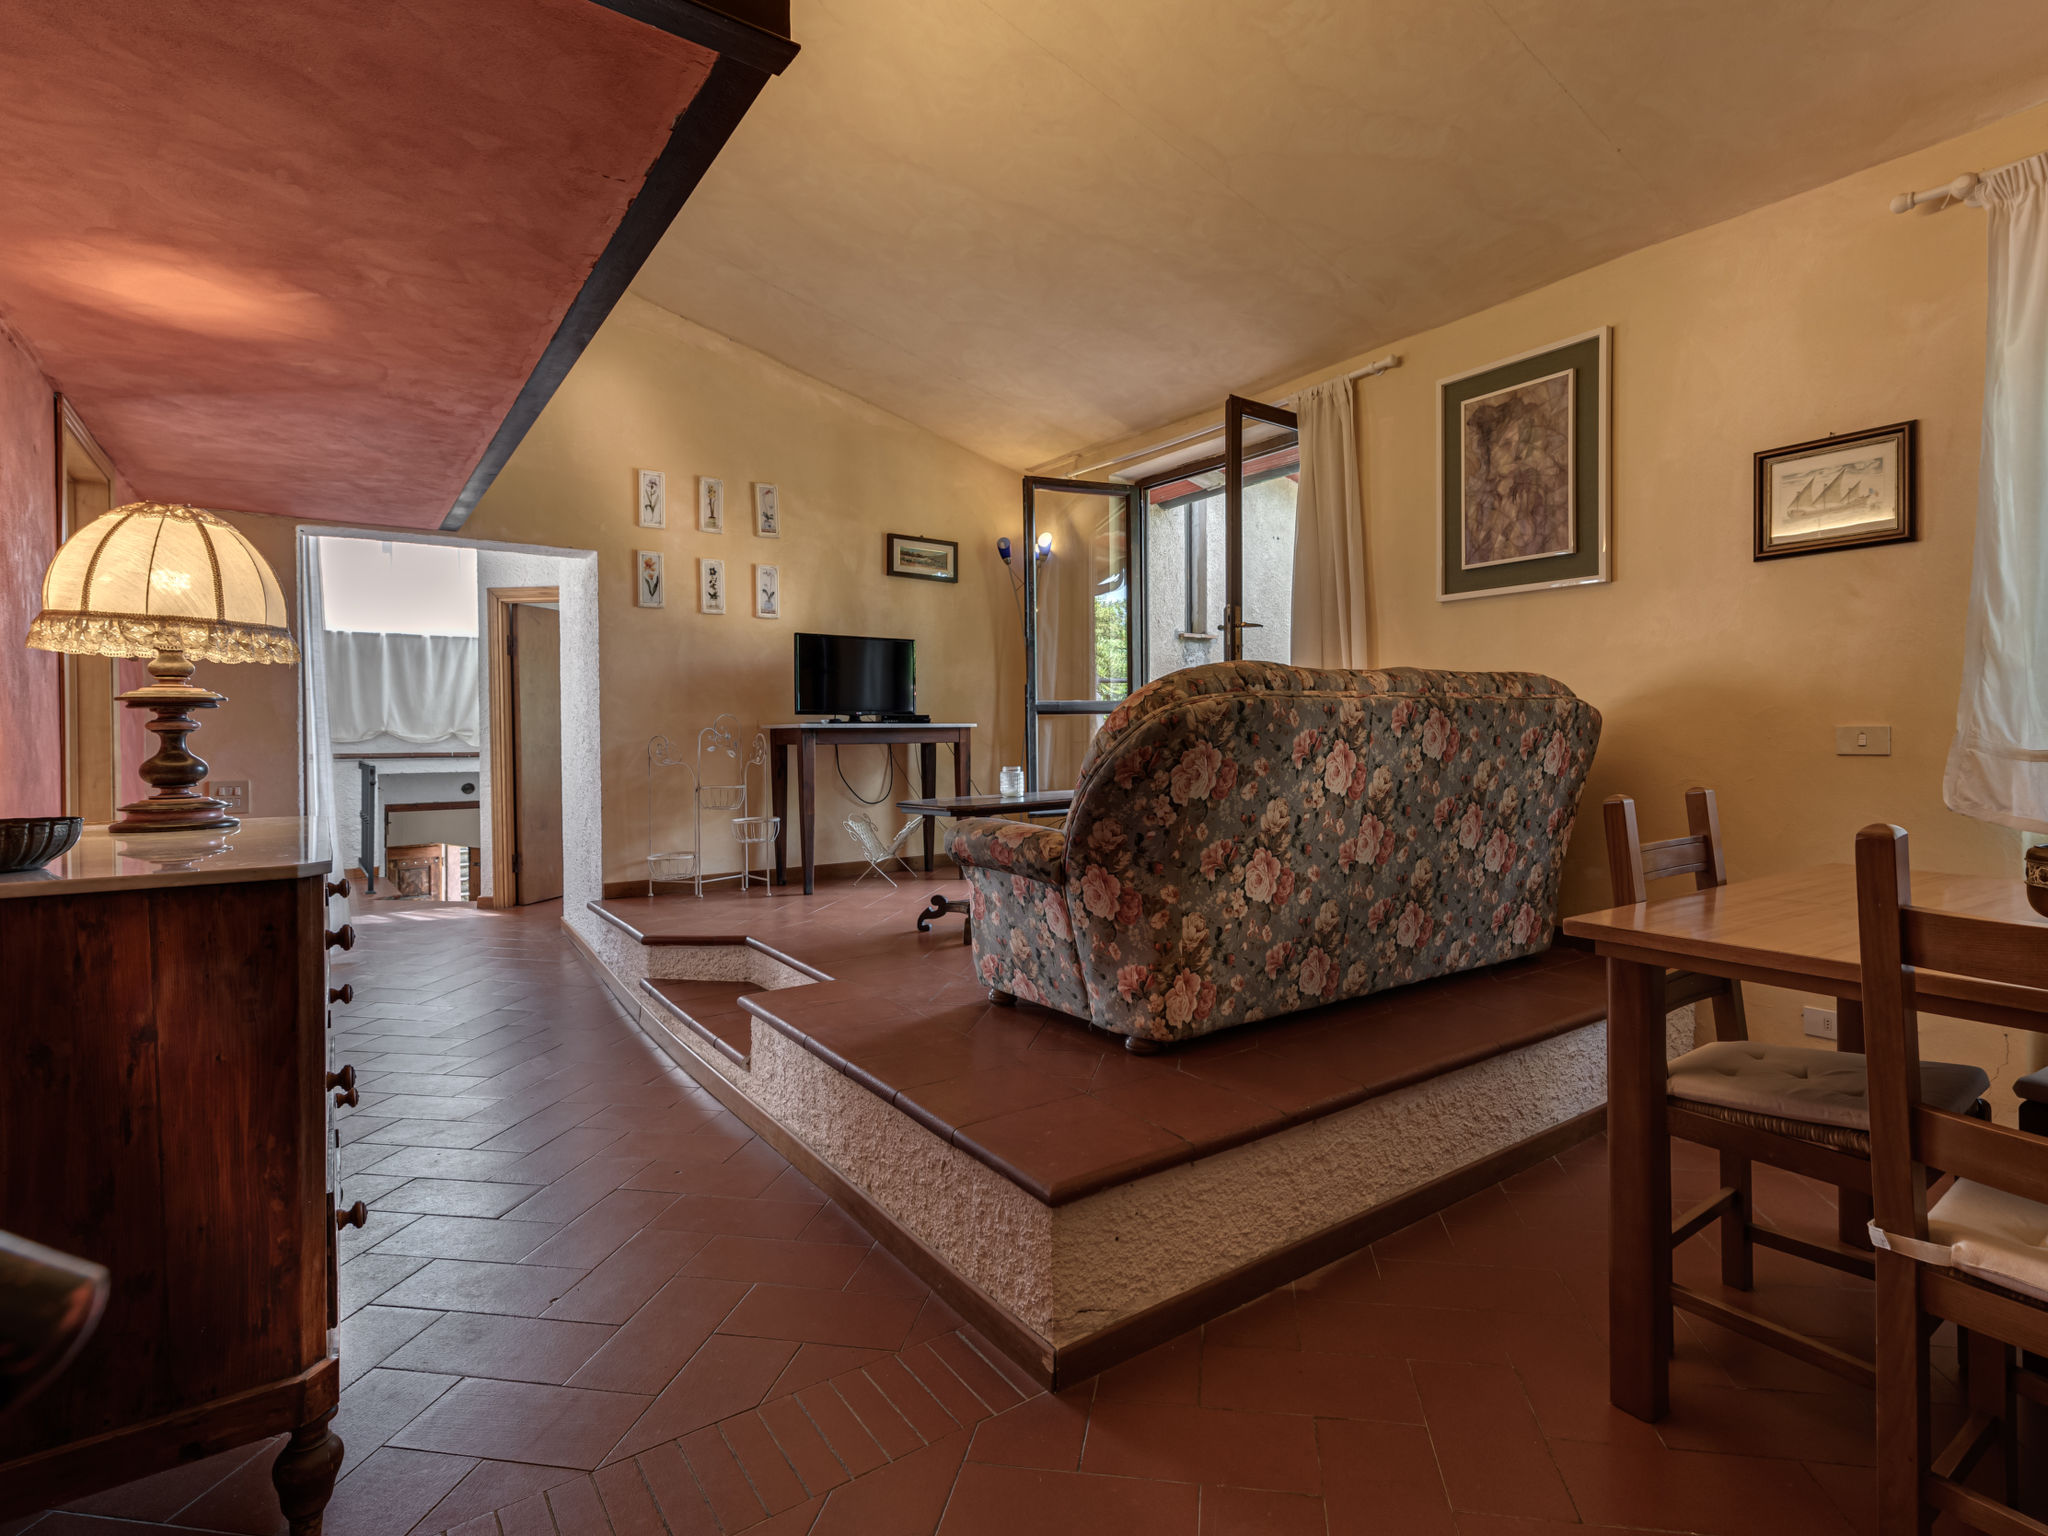 Foto 16 - Casa con 4 camere da letto a San Gimignano con piscina e giardino